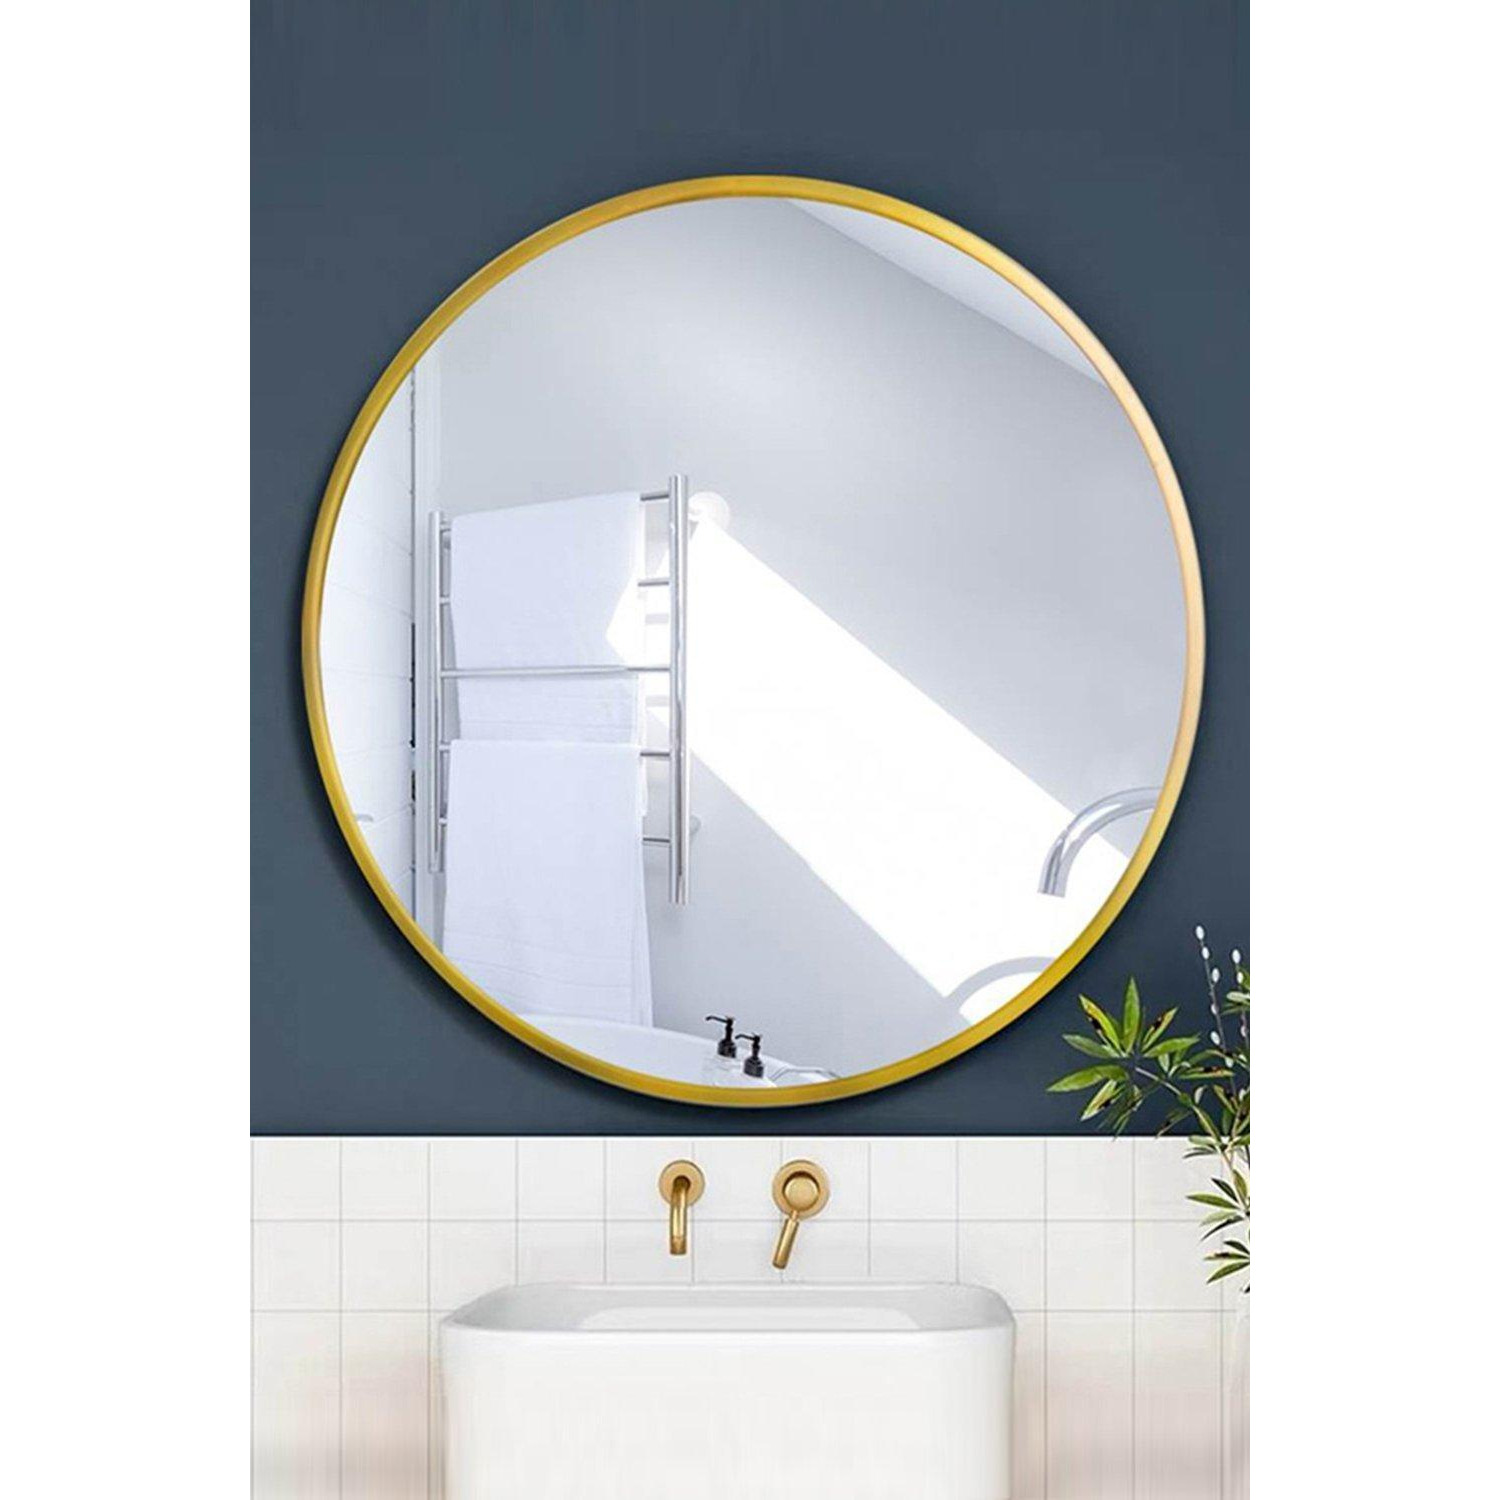 50cm Nordic Round Wall Mirror - image 1